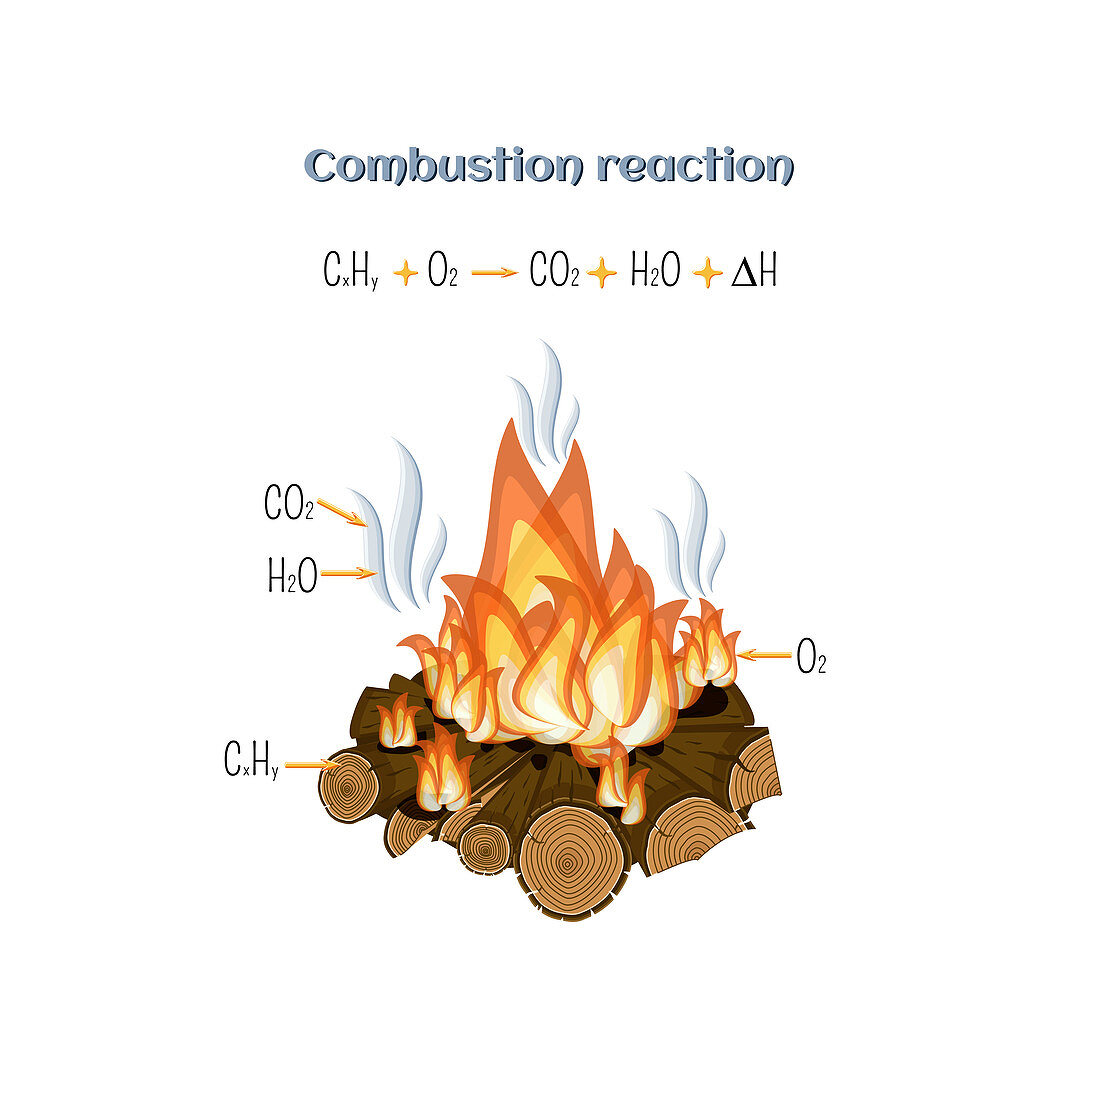 Combustion reaction, illustration